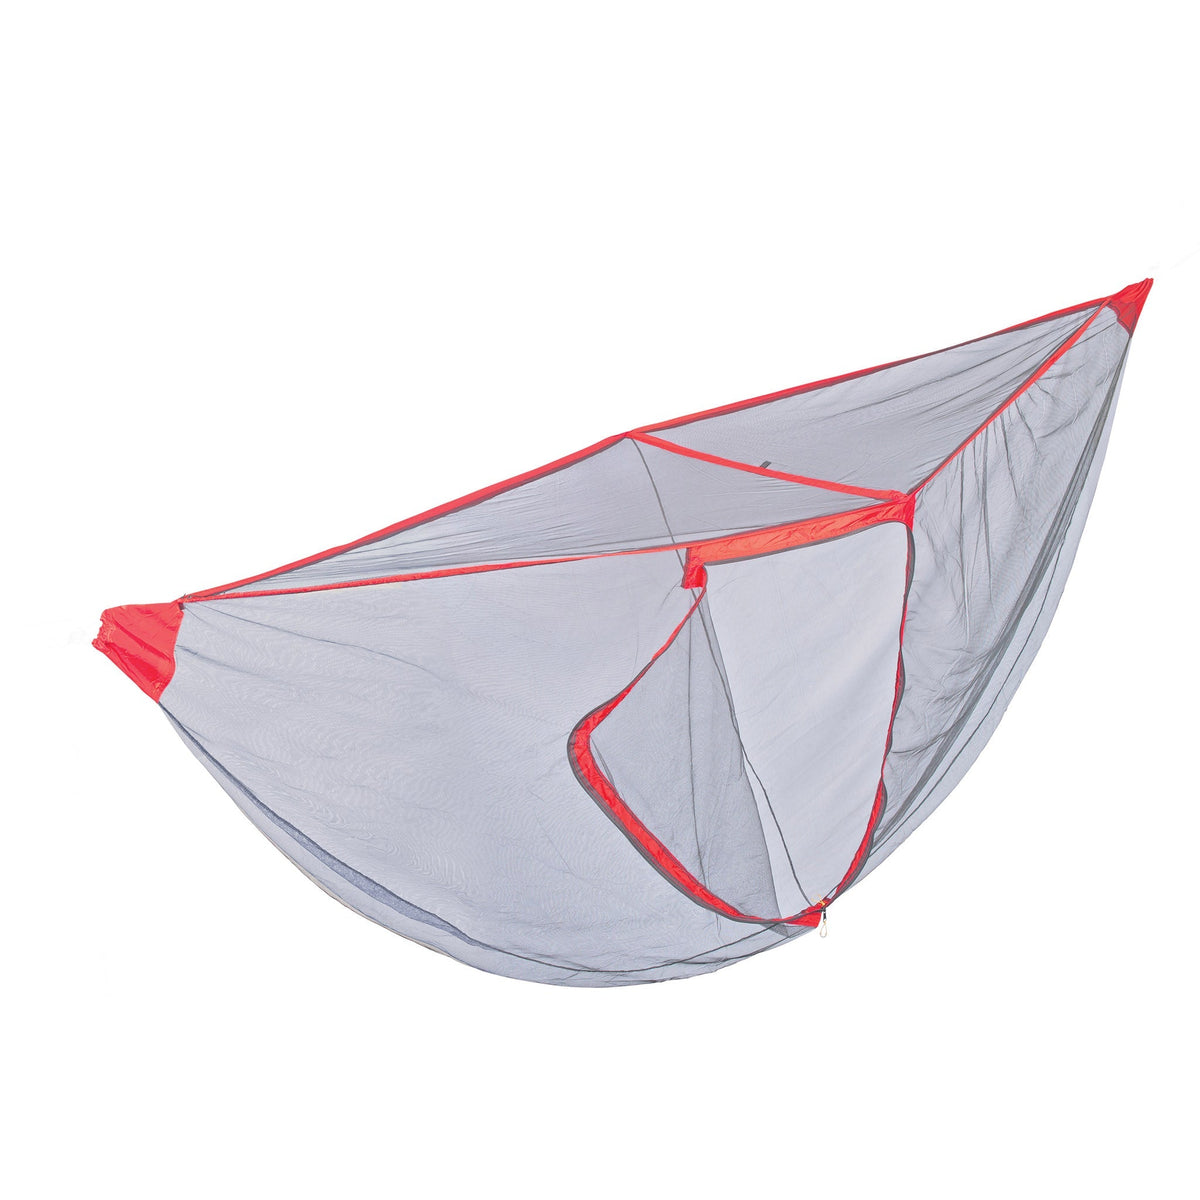 Hammock Bug Net _ mosquito net protection tent